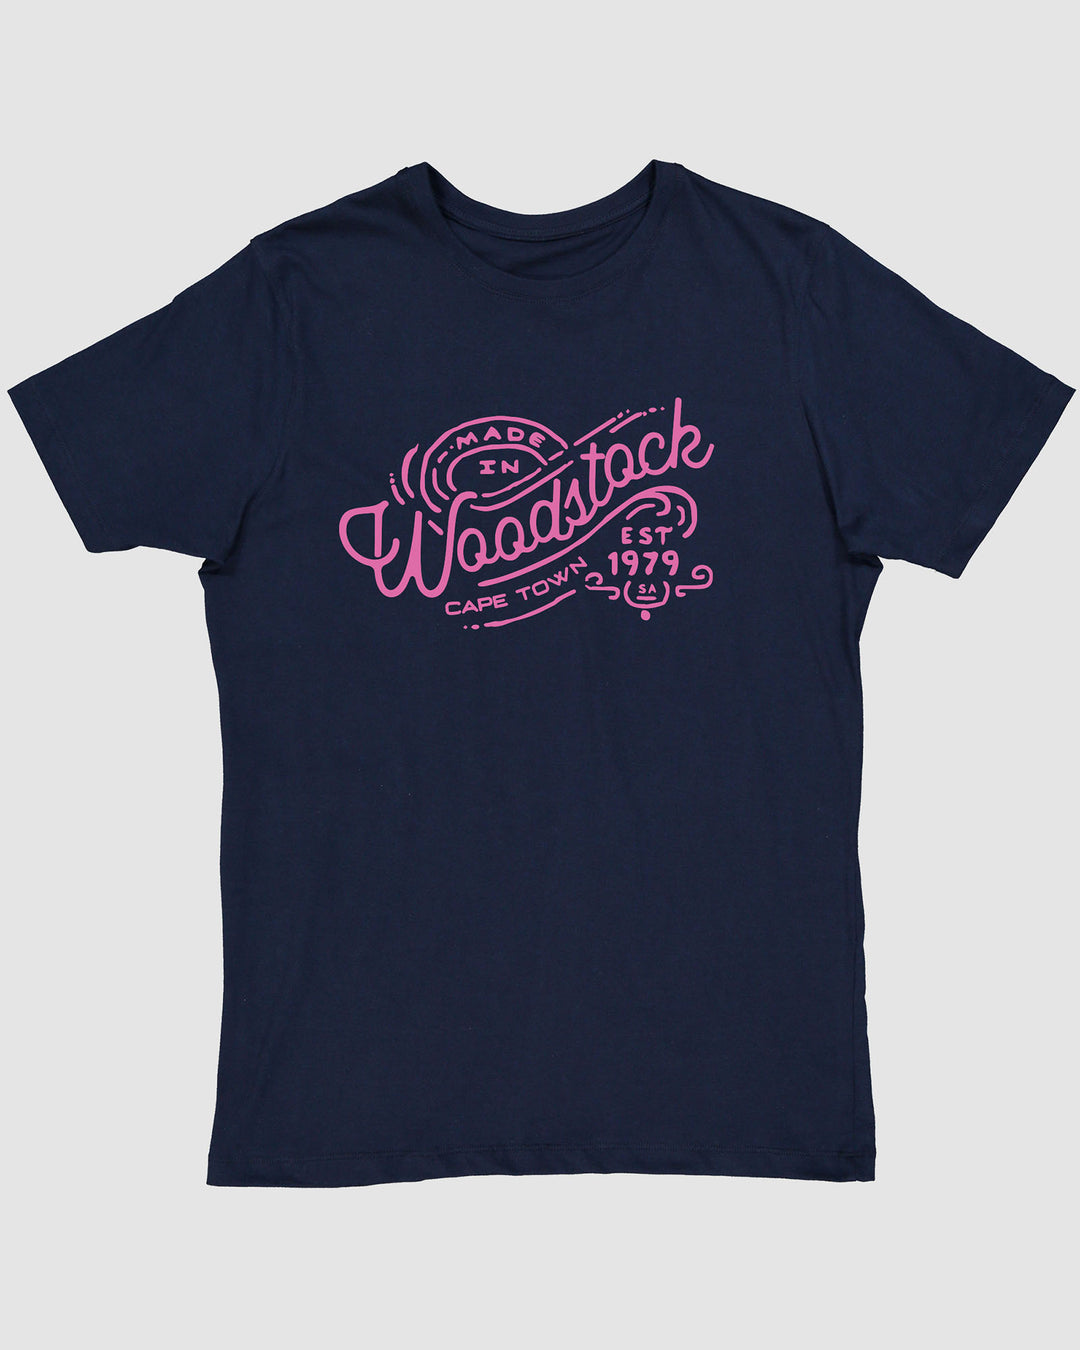 Mens Navy T-shirt Made in Woodstock Flatpack - Woodstock Laundry UK